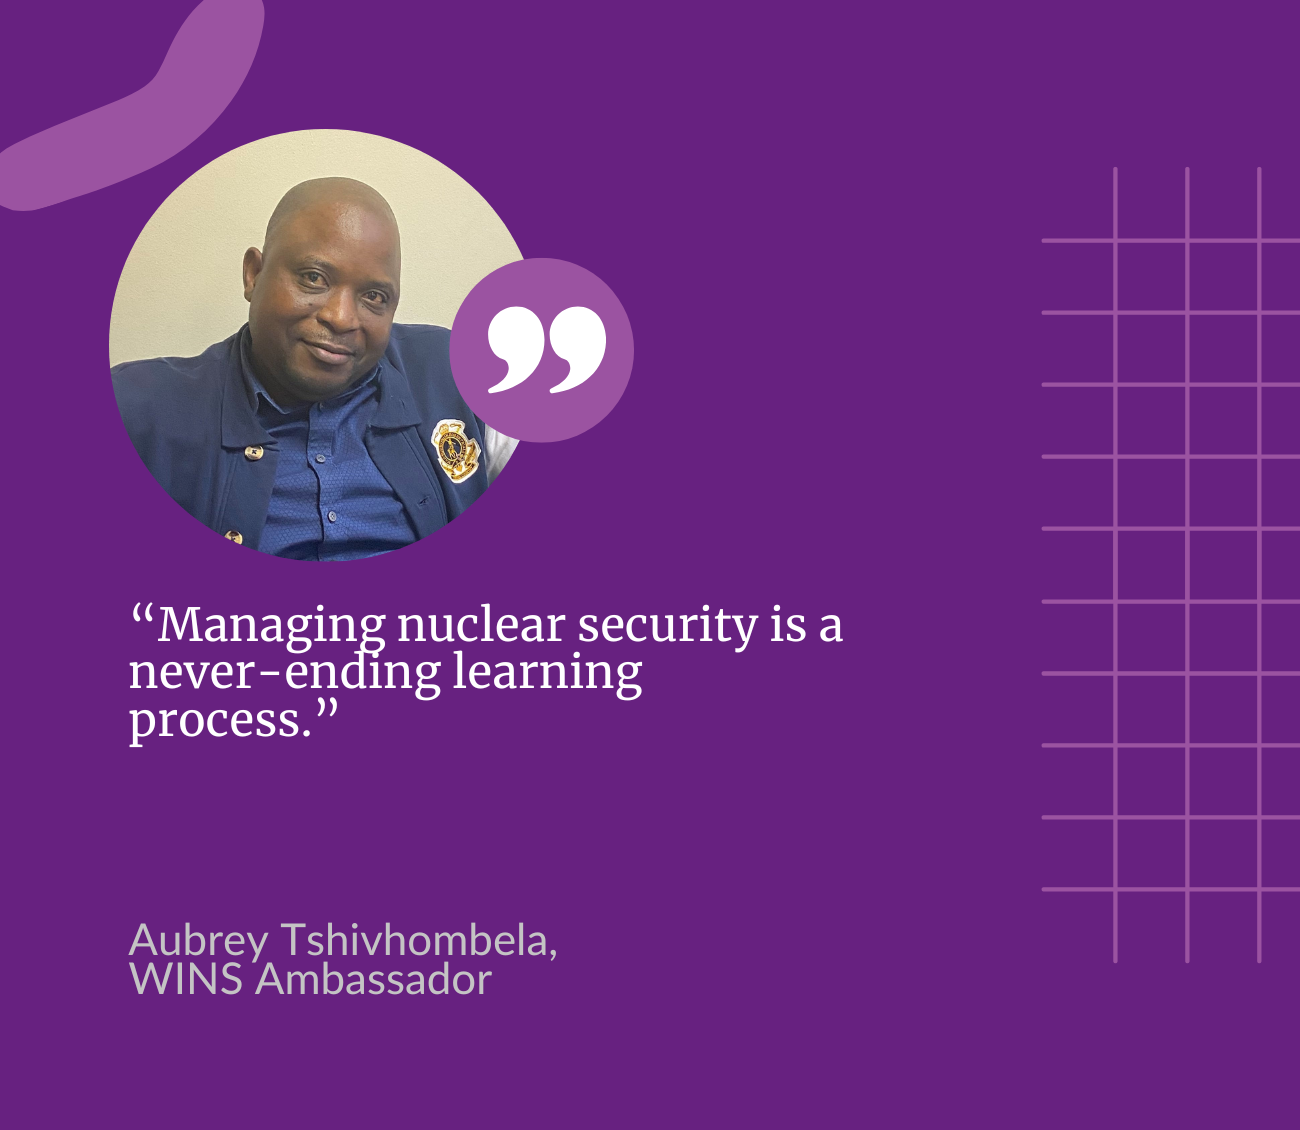 Meet a WINS Ambassador: Aubrey Tshivhombela